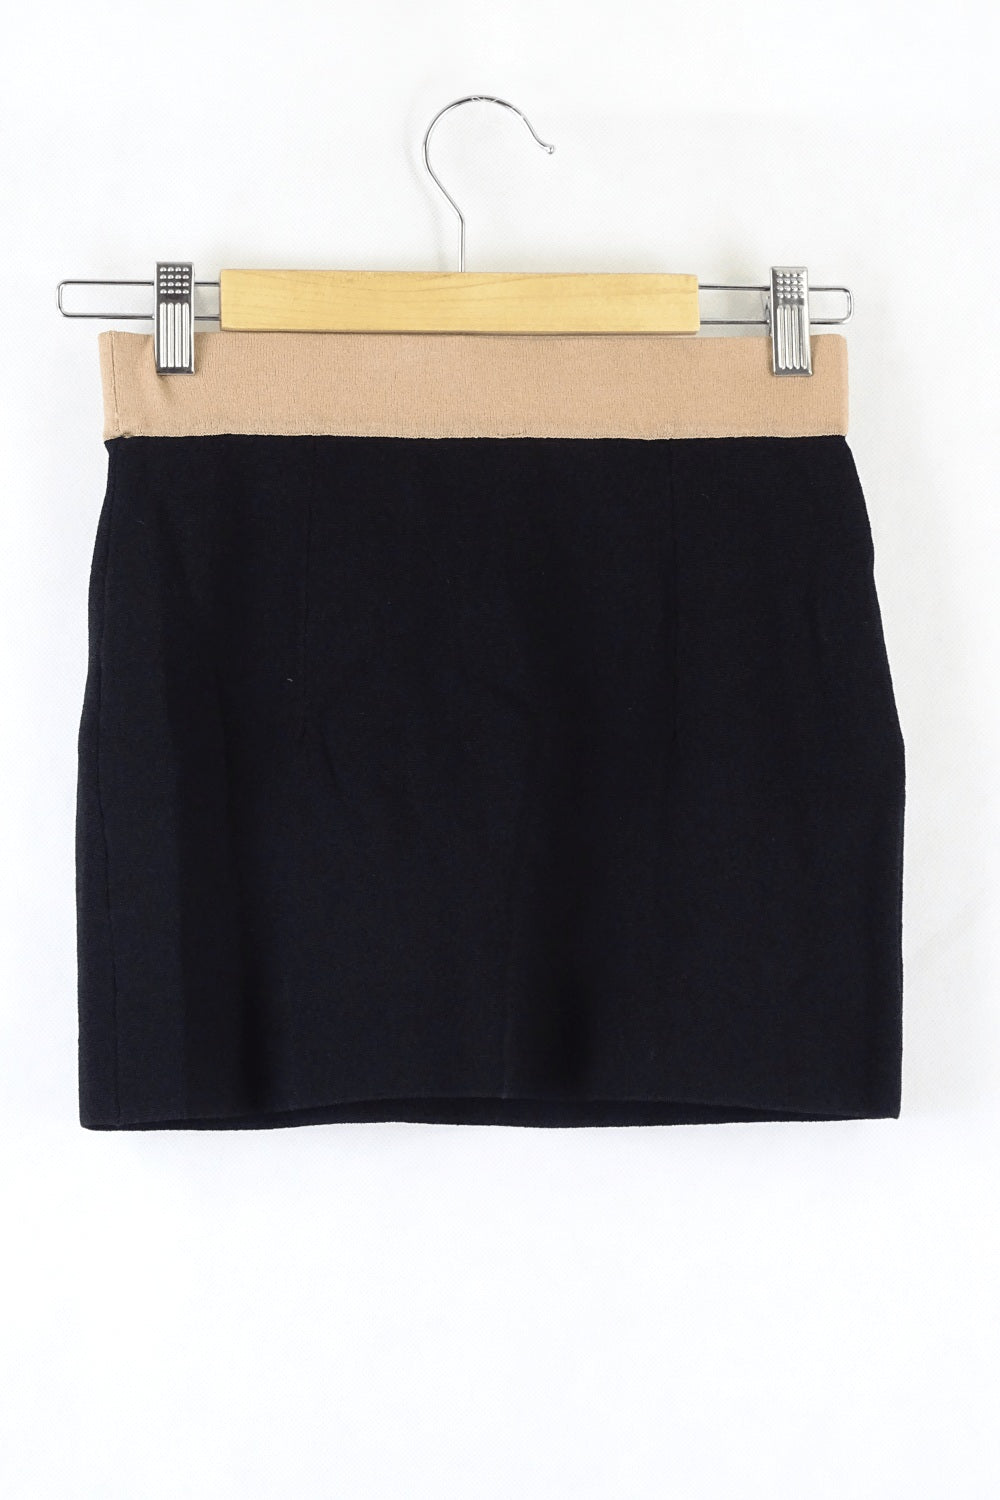 Kirrily Johnston Black And Brown Skirt 4 (Au 8)